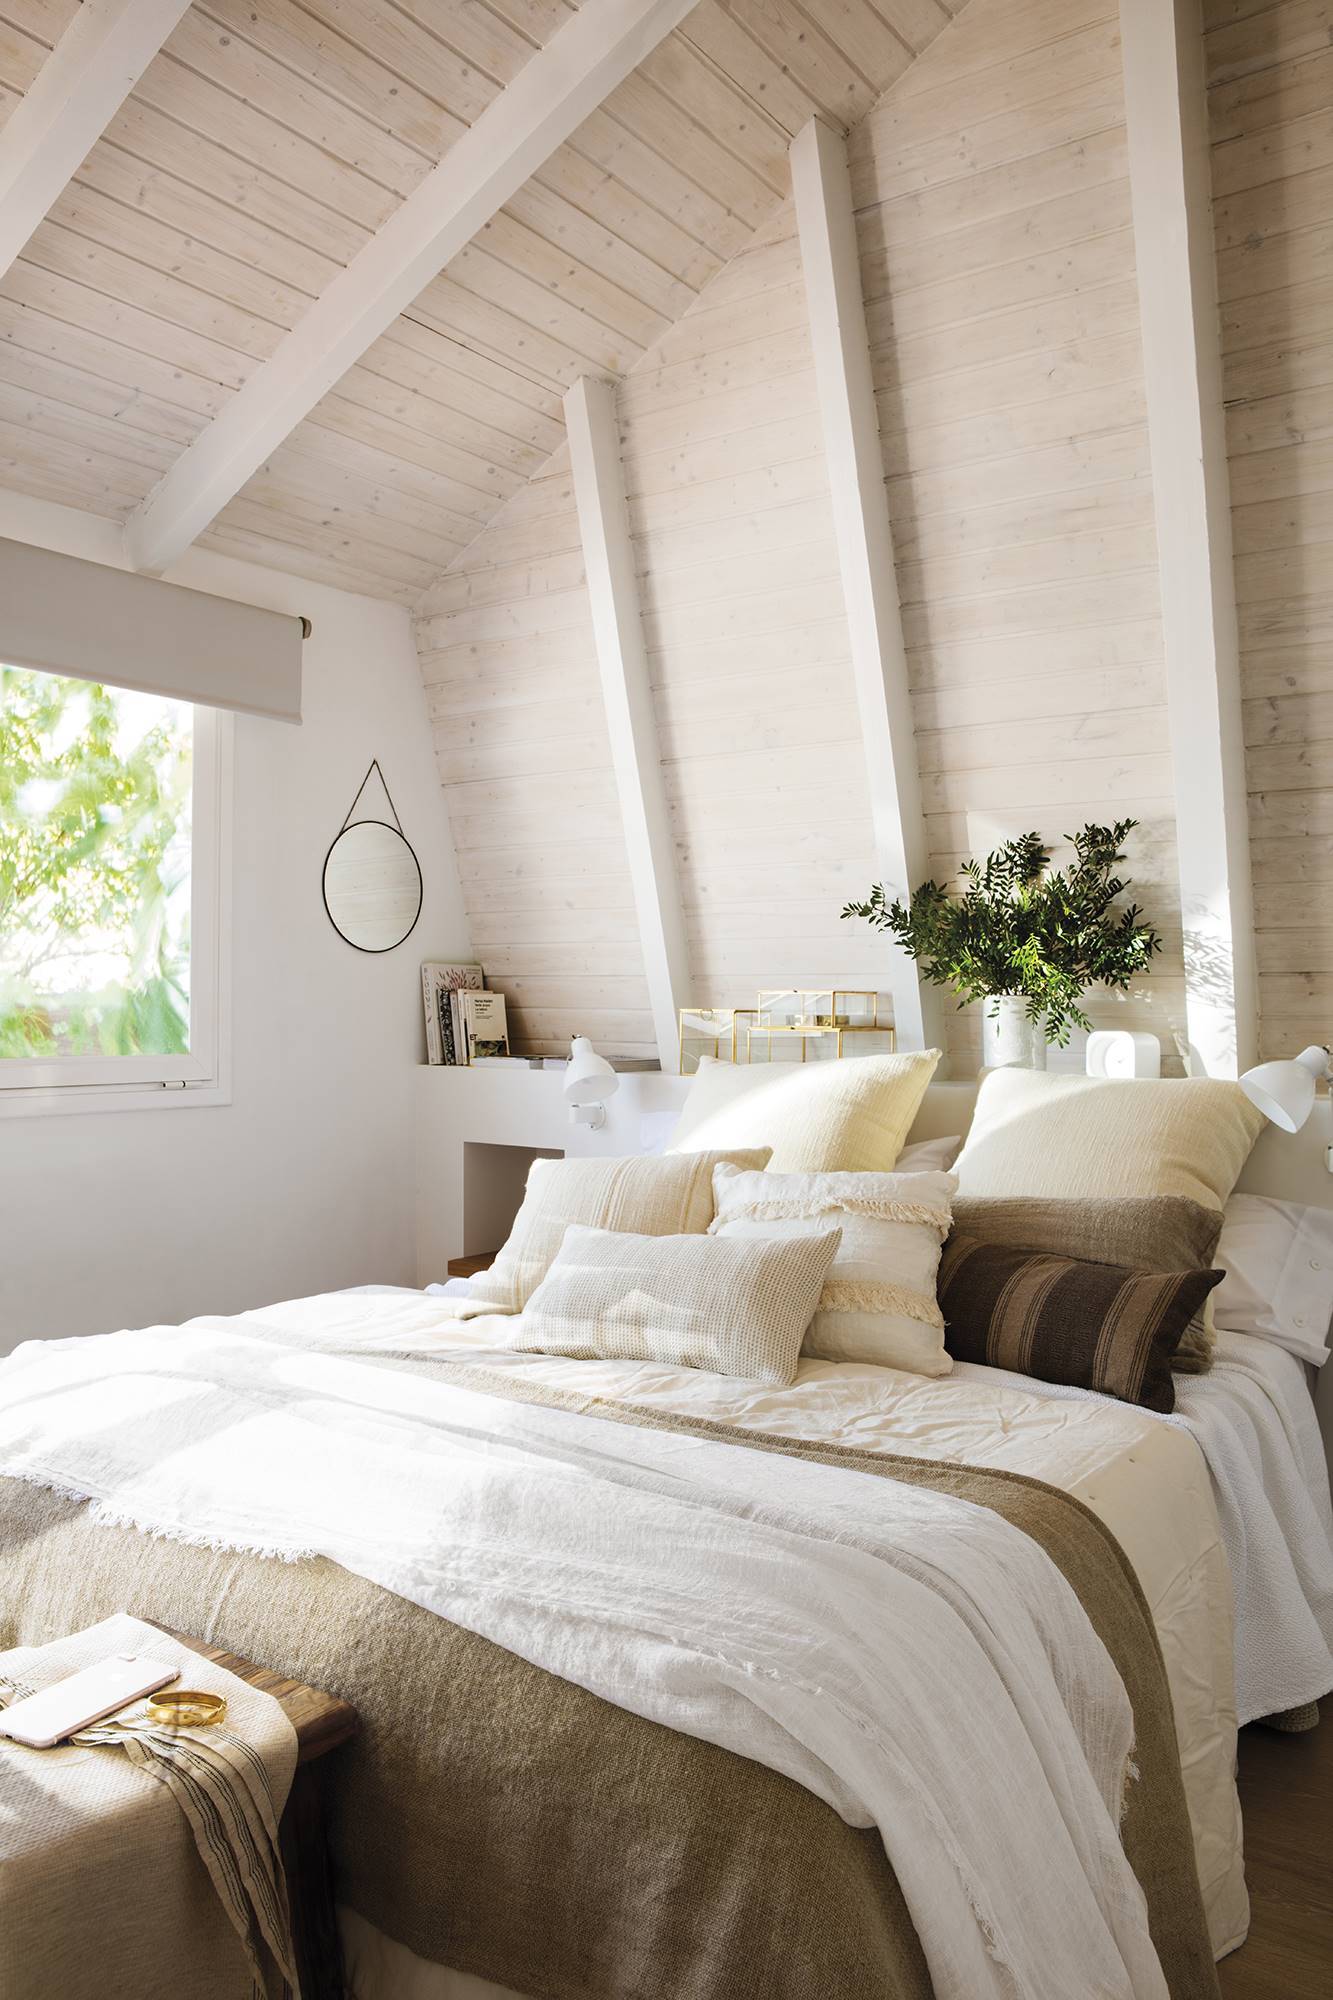 Dormitorio abuhardillado revestido de madera blanca.